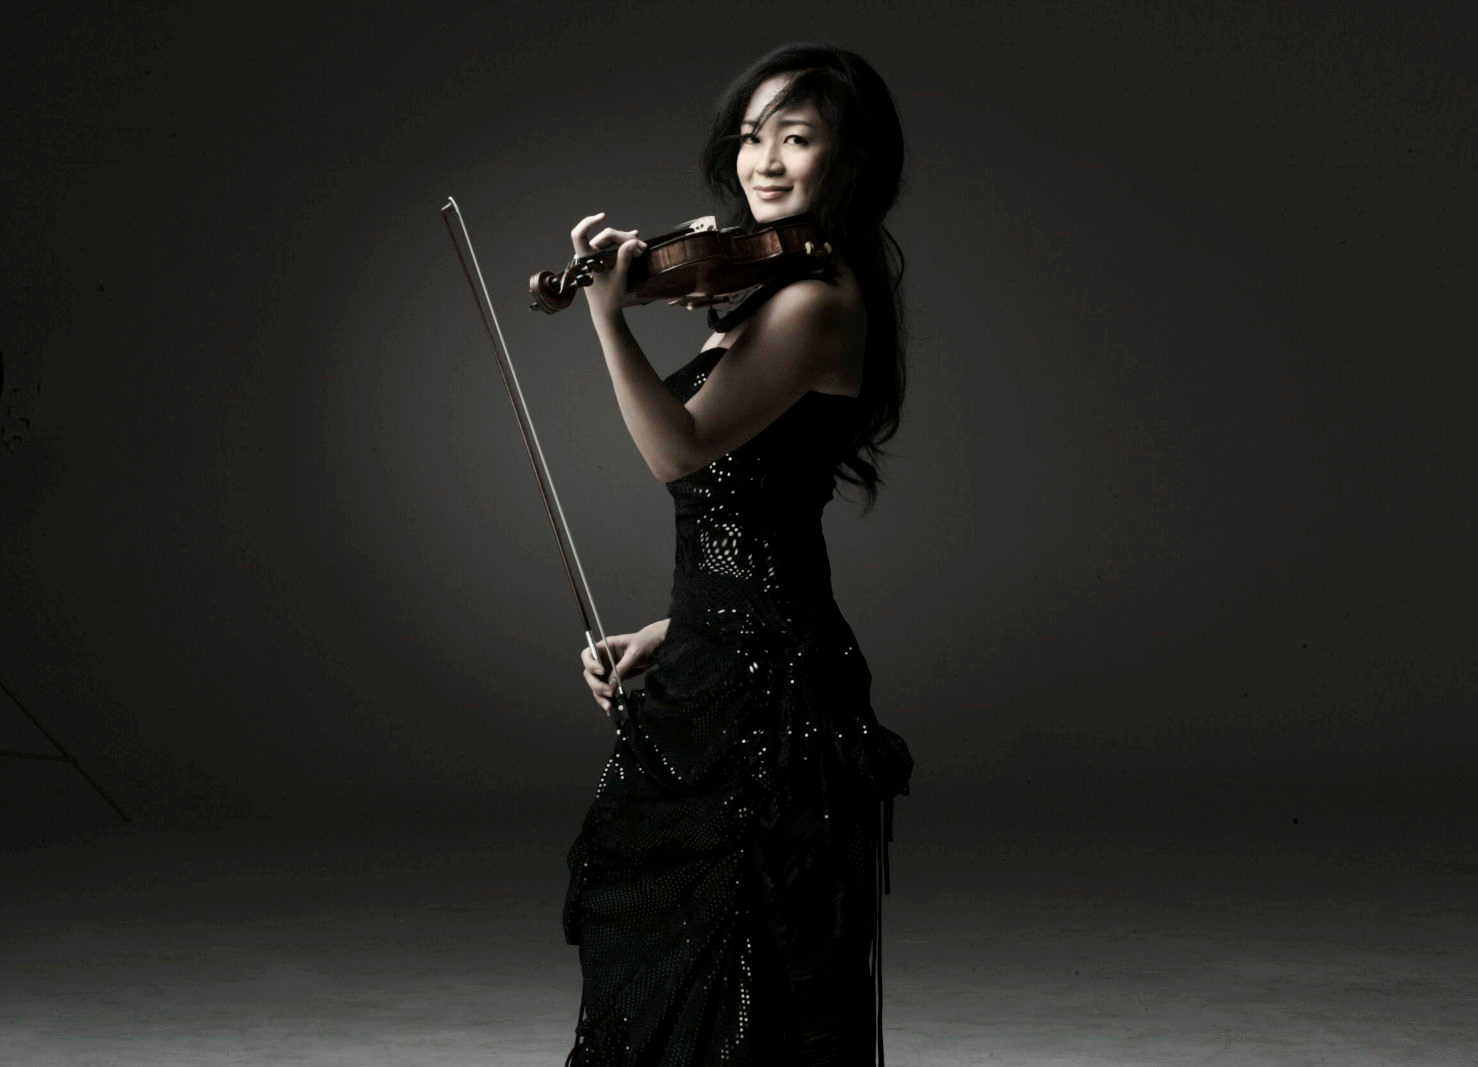 Chee-Yun holding violin wearing black dress